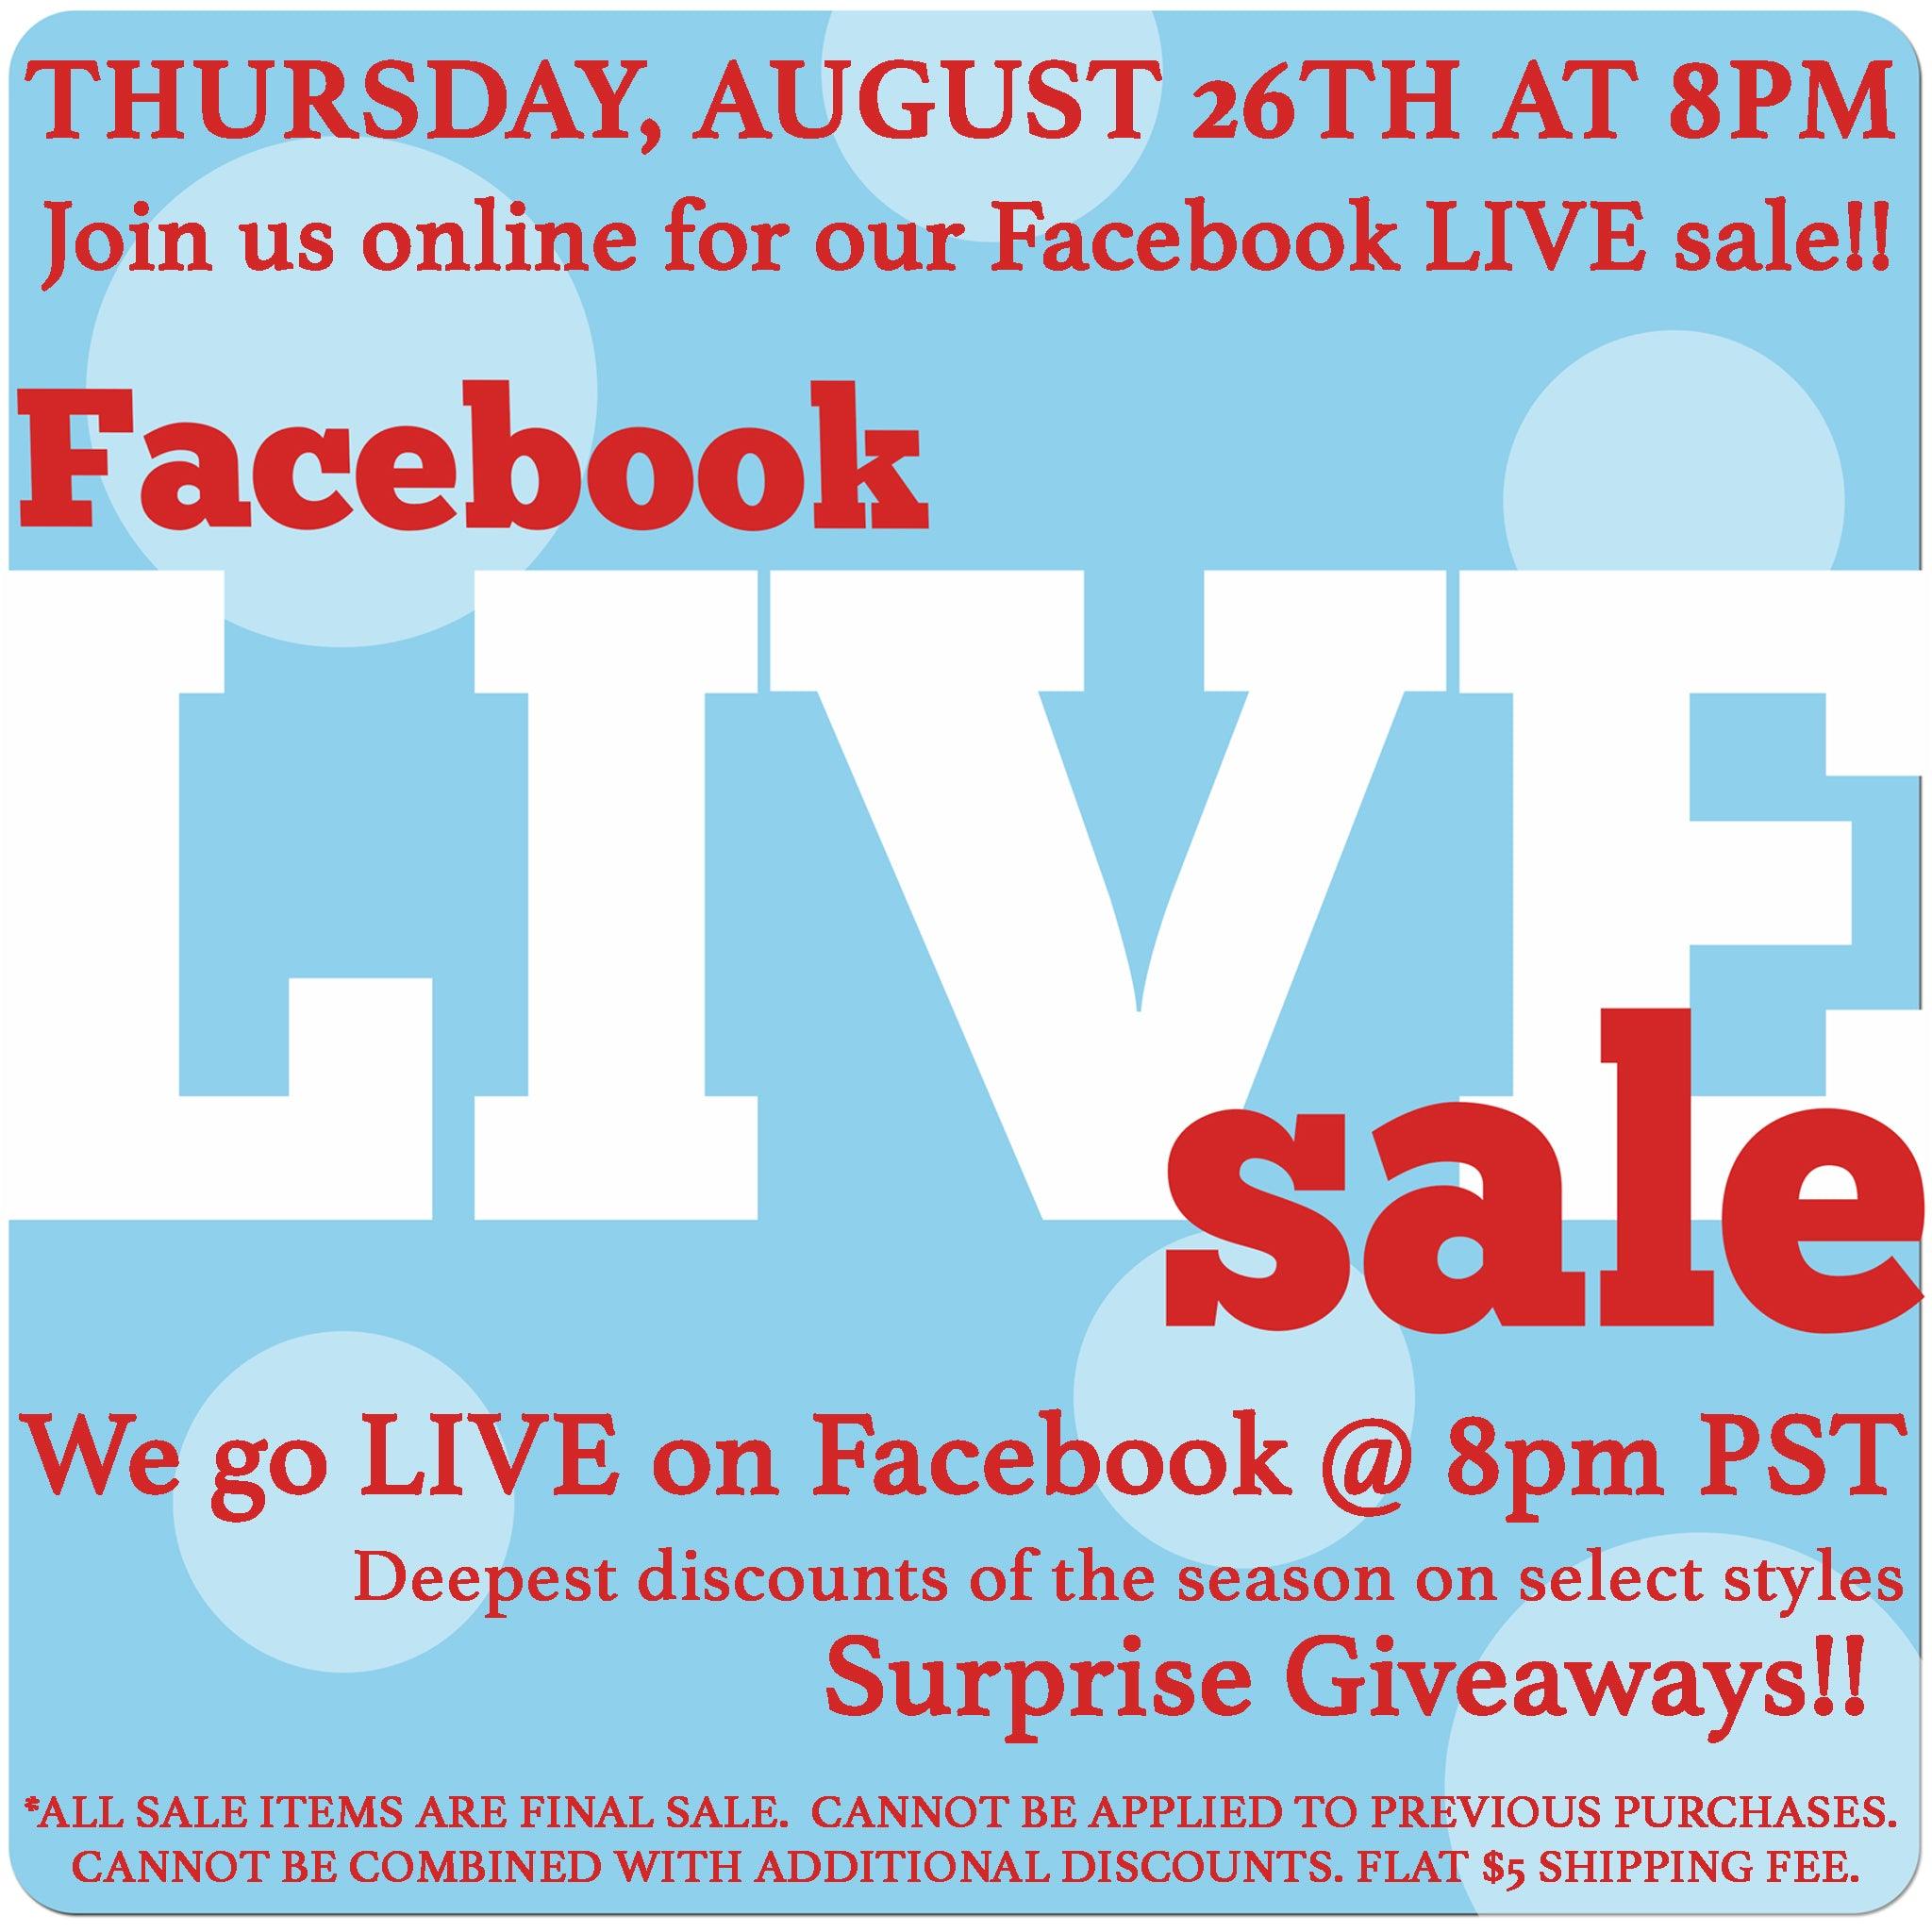 Facebook Live Sale - Arktana